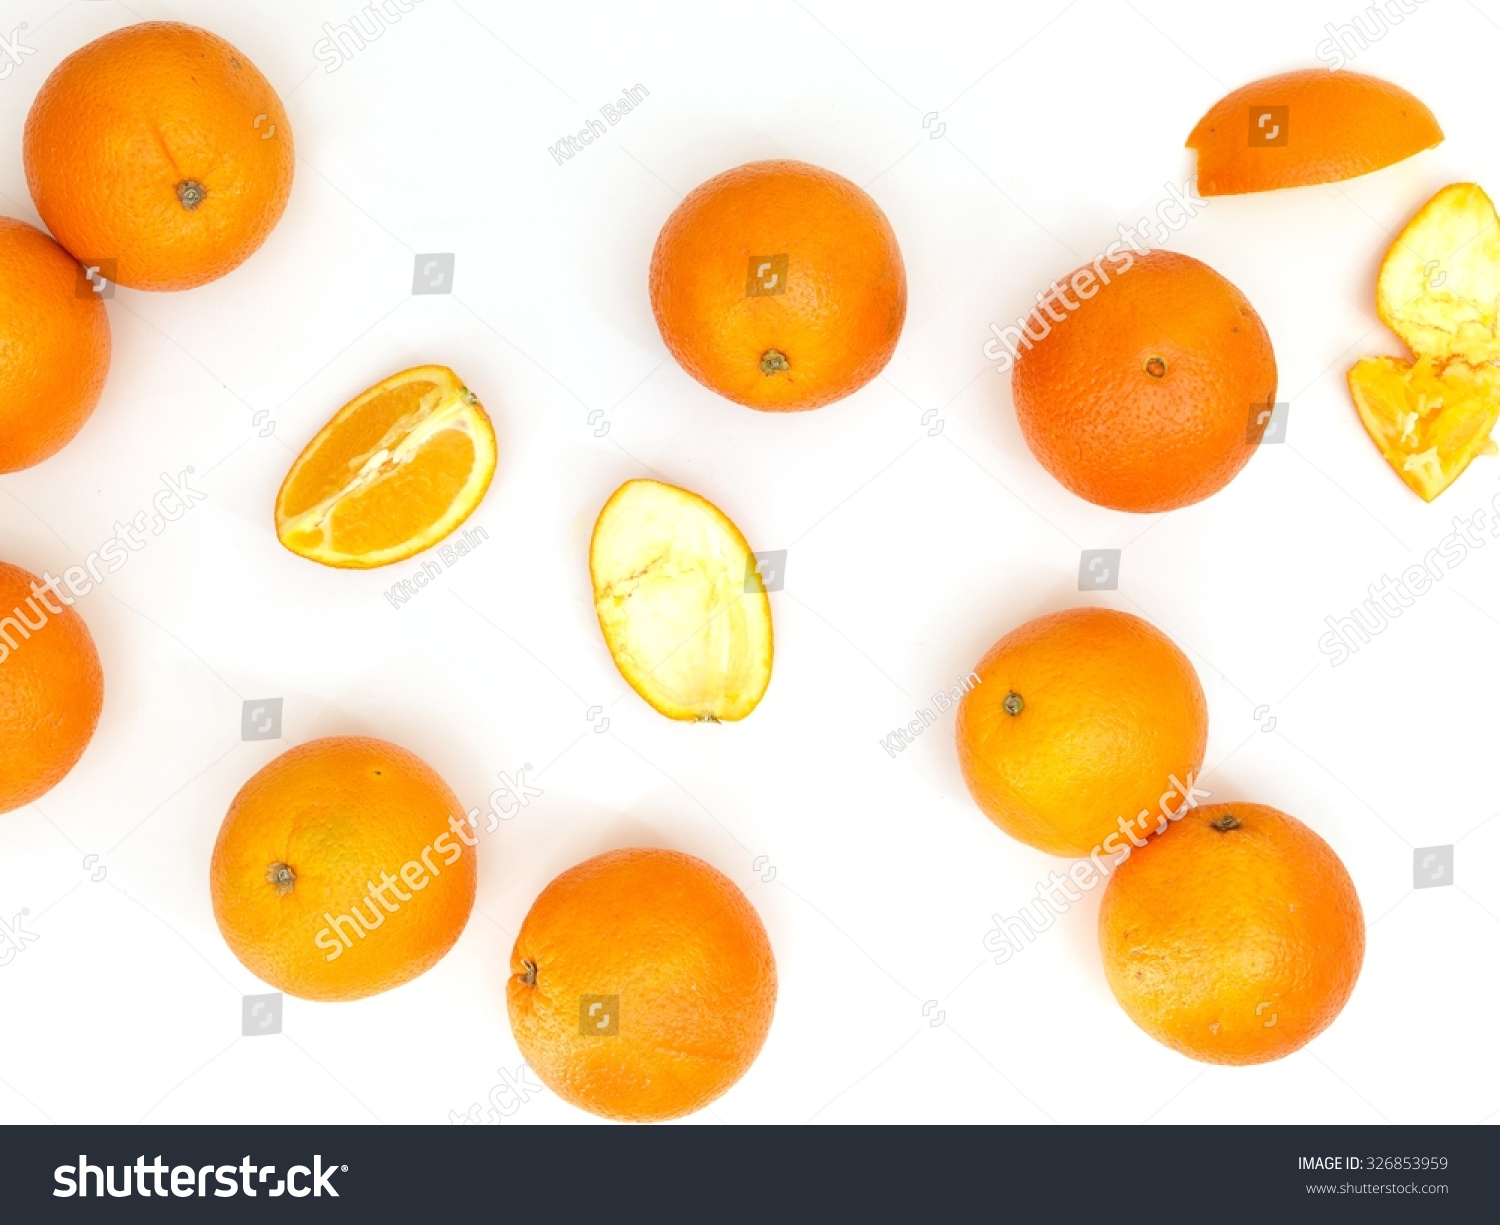 A close up photo of fresh oranges #326853959